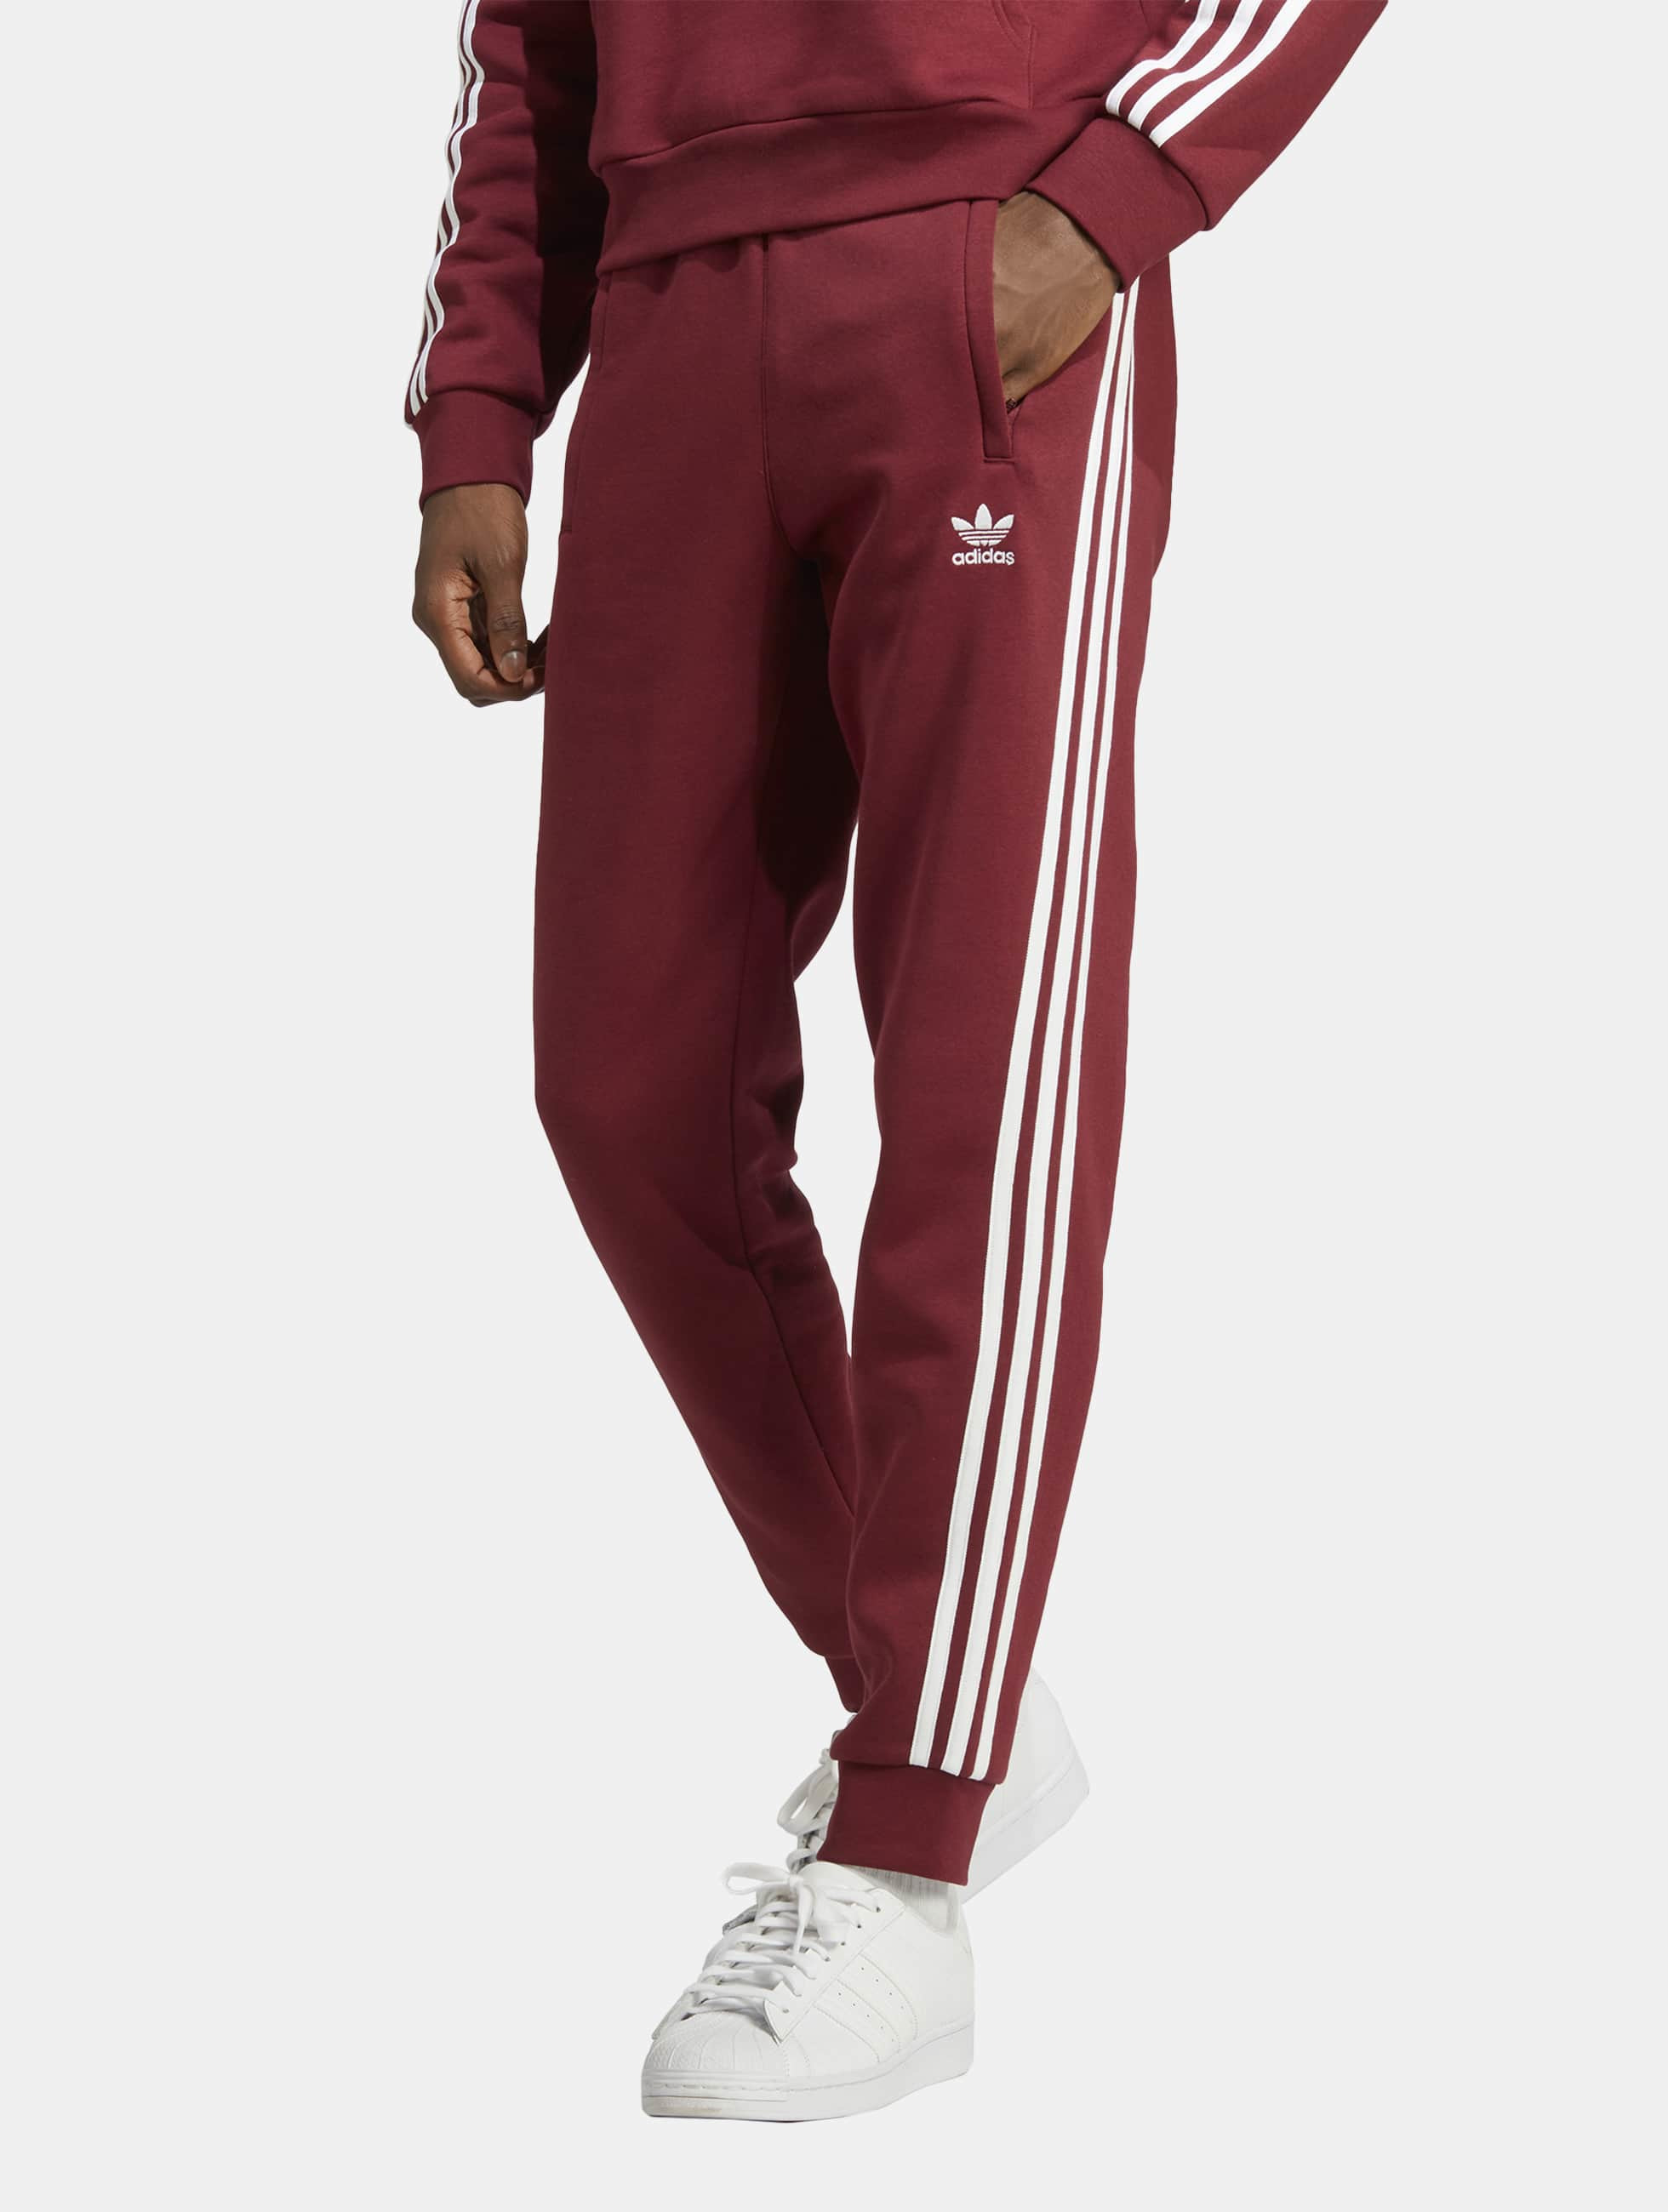 Uitstekend Doorweekt Gewend aan adidas Originals broek / joggingbroek 3 Stripes in rood 1007243